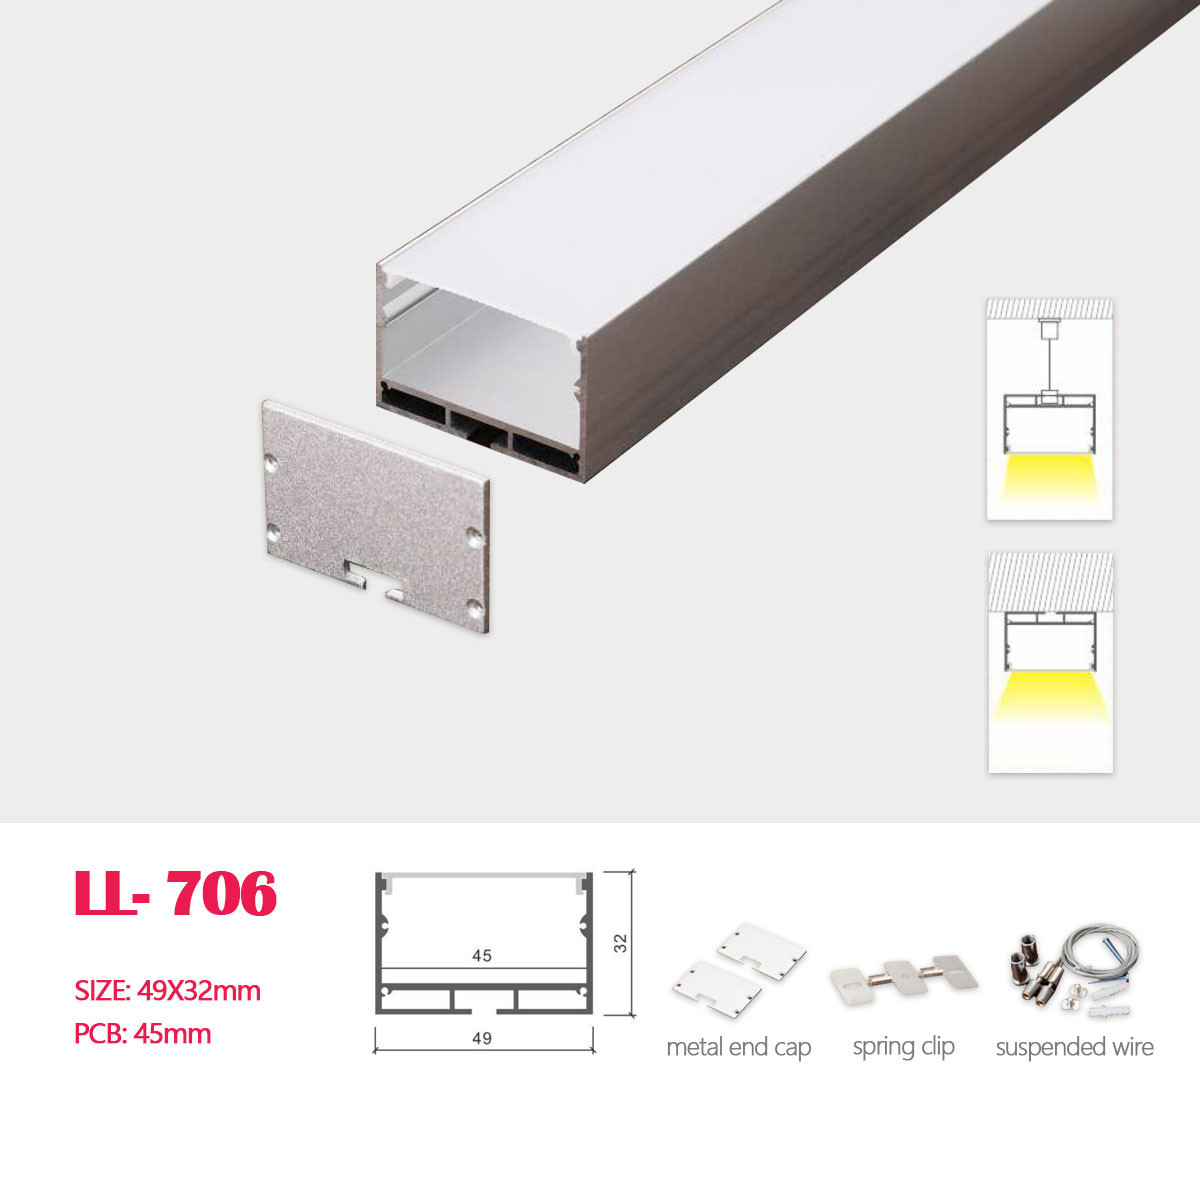 Rectangular aluminium profile 1 m long LED strip with mounting clips